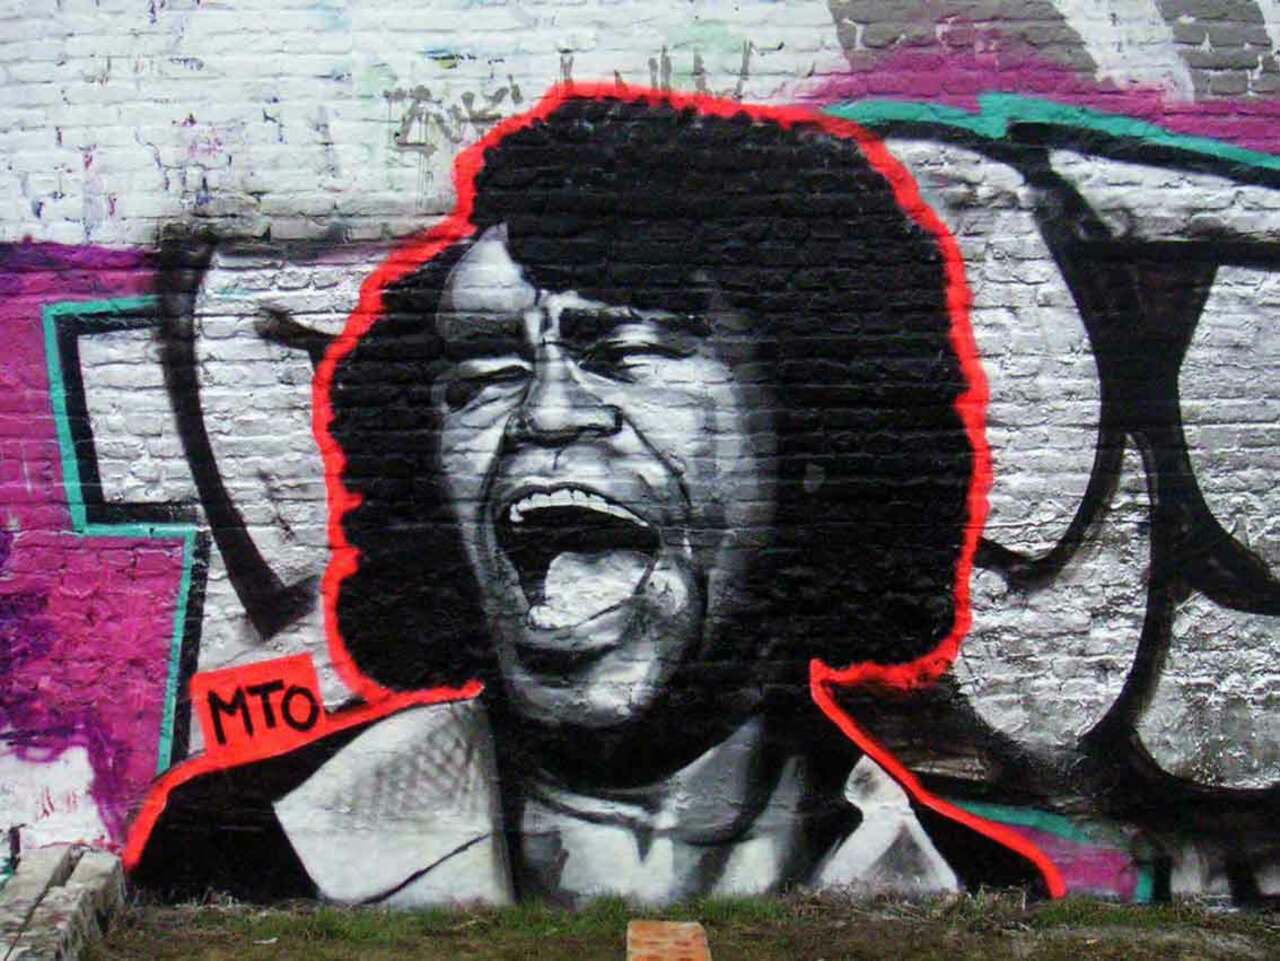 'James Brown' #Graffiti #Art by MTO                           #Mural #StreetArt #Berlin #Germany https://t.co/wJgXkIjj8f